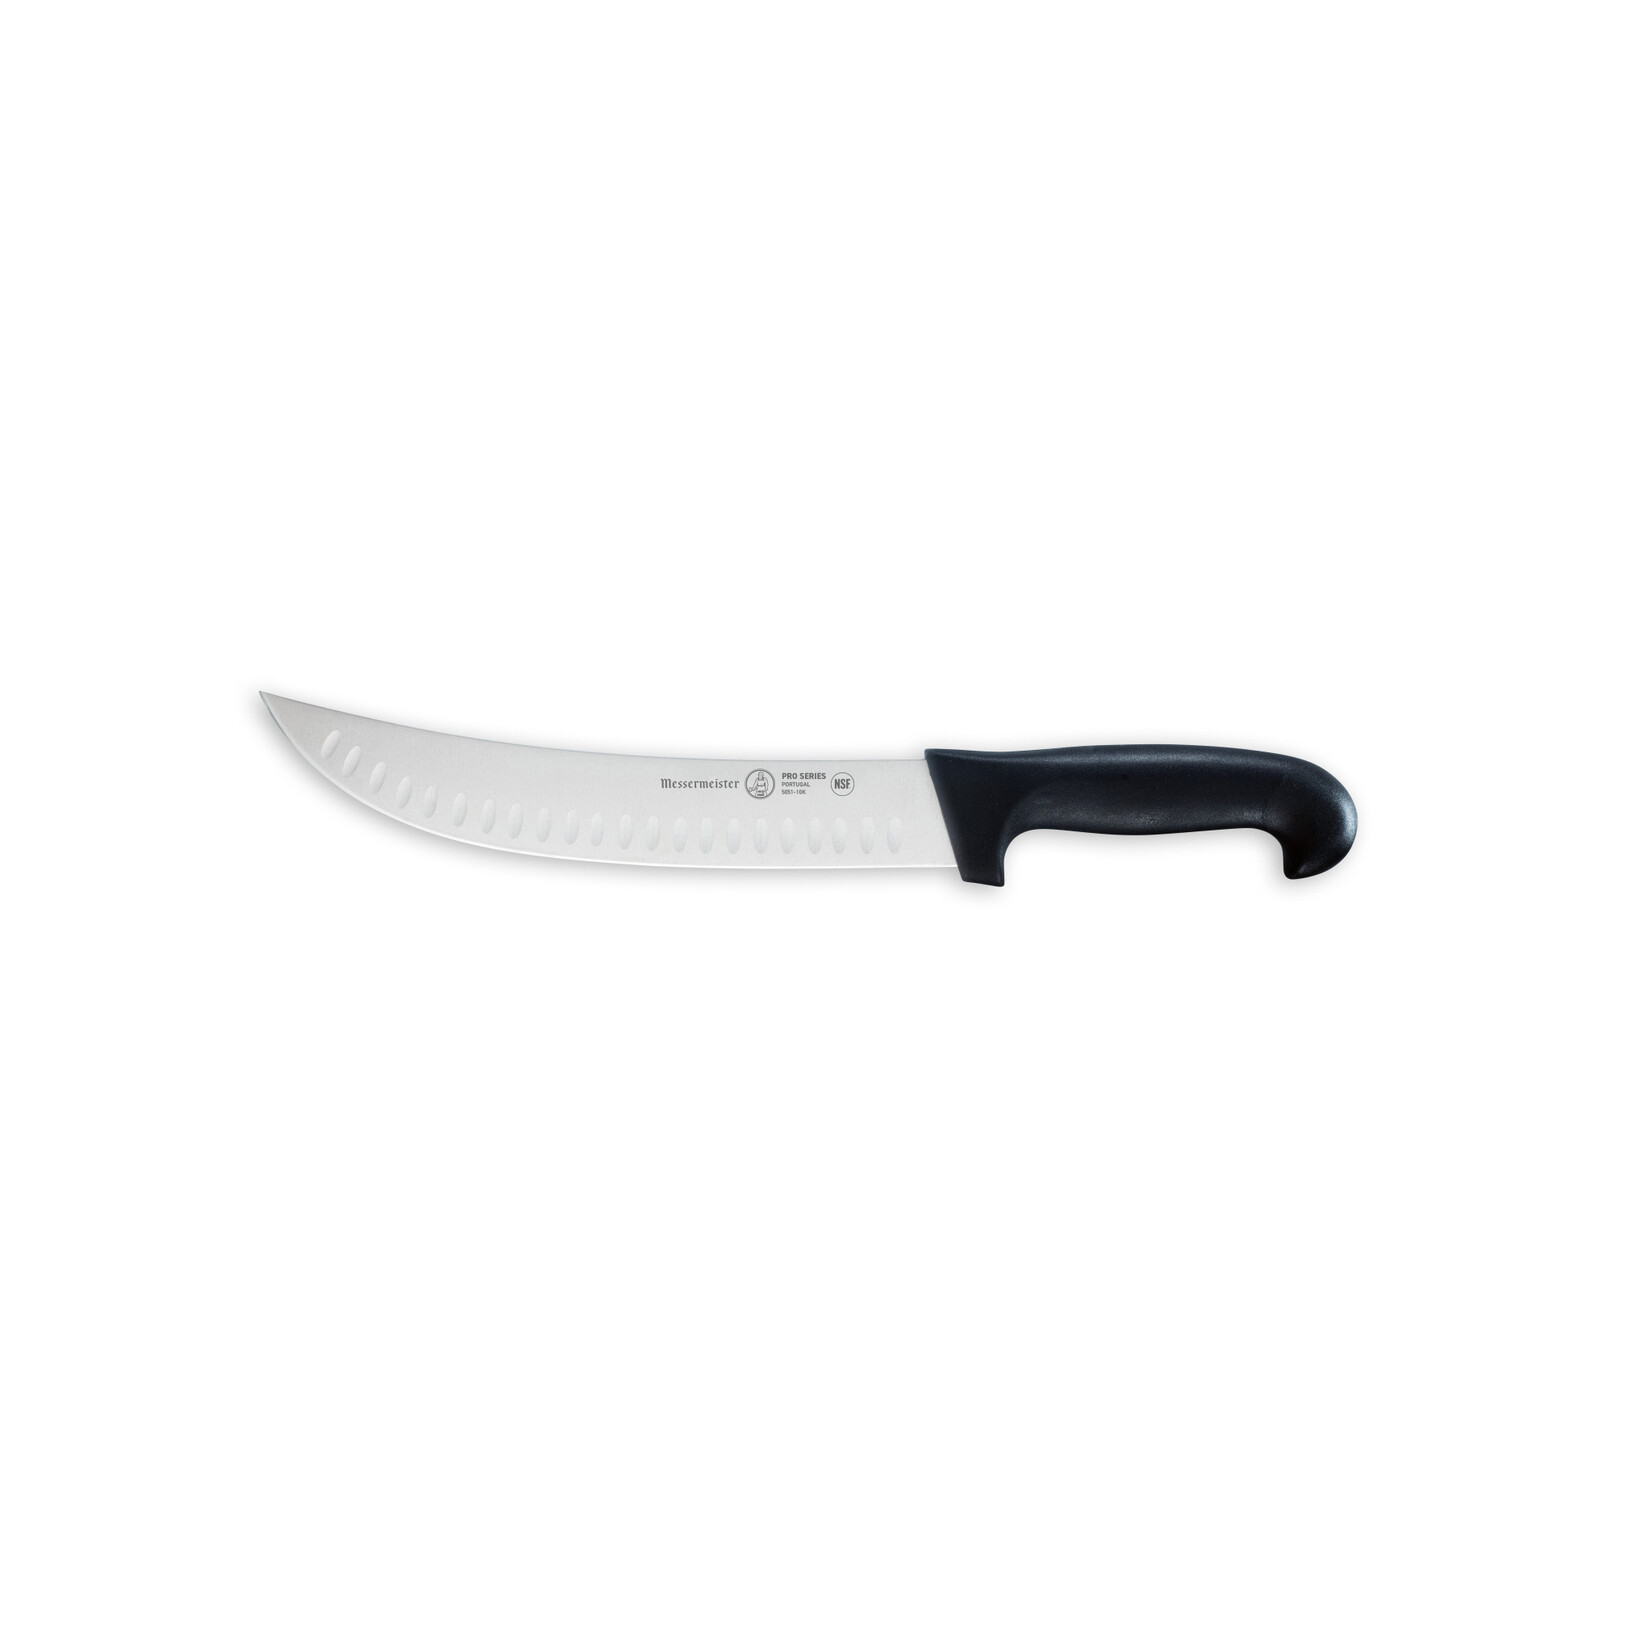 Messermeister Pro Series 10 Inch Kullenschliff Scimitar Knife with Polypropylene Handle